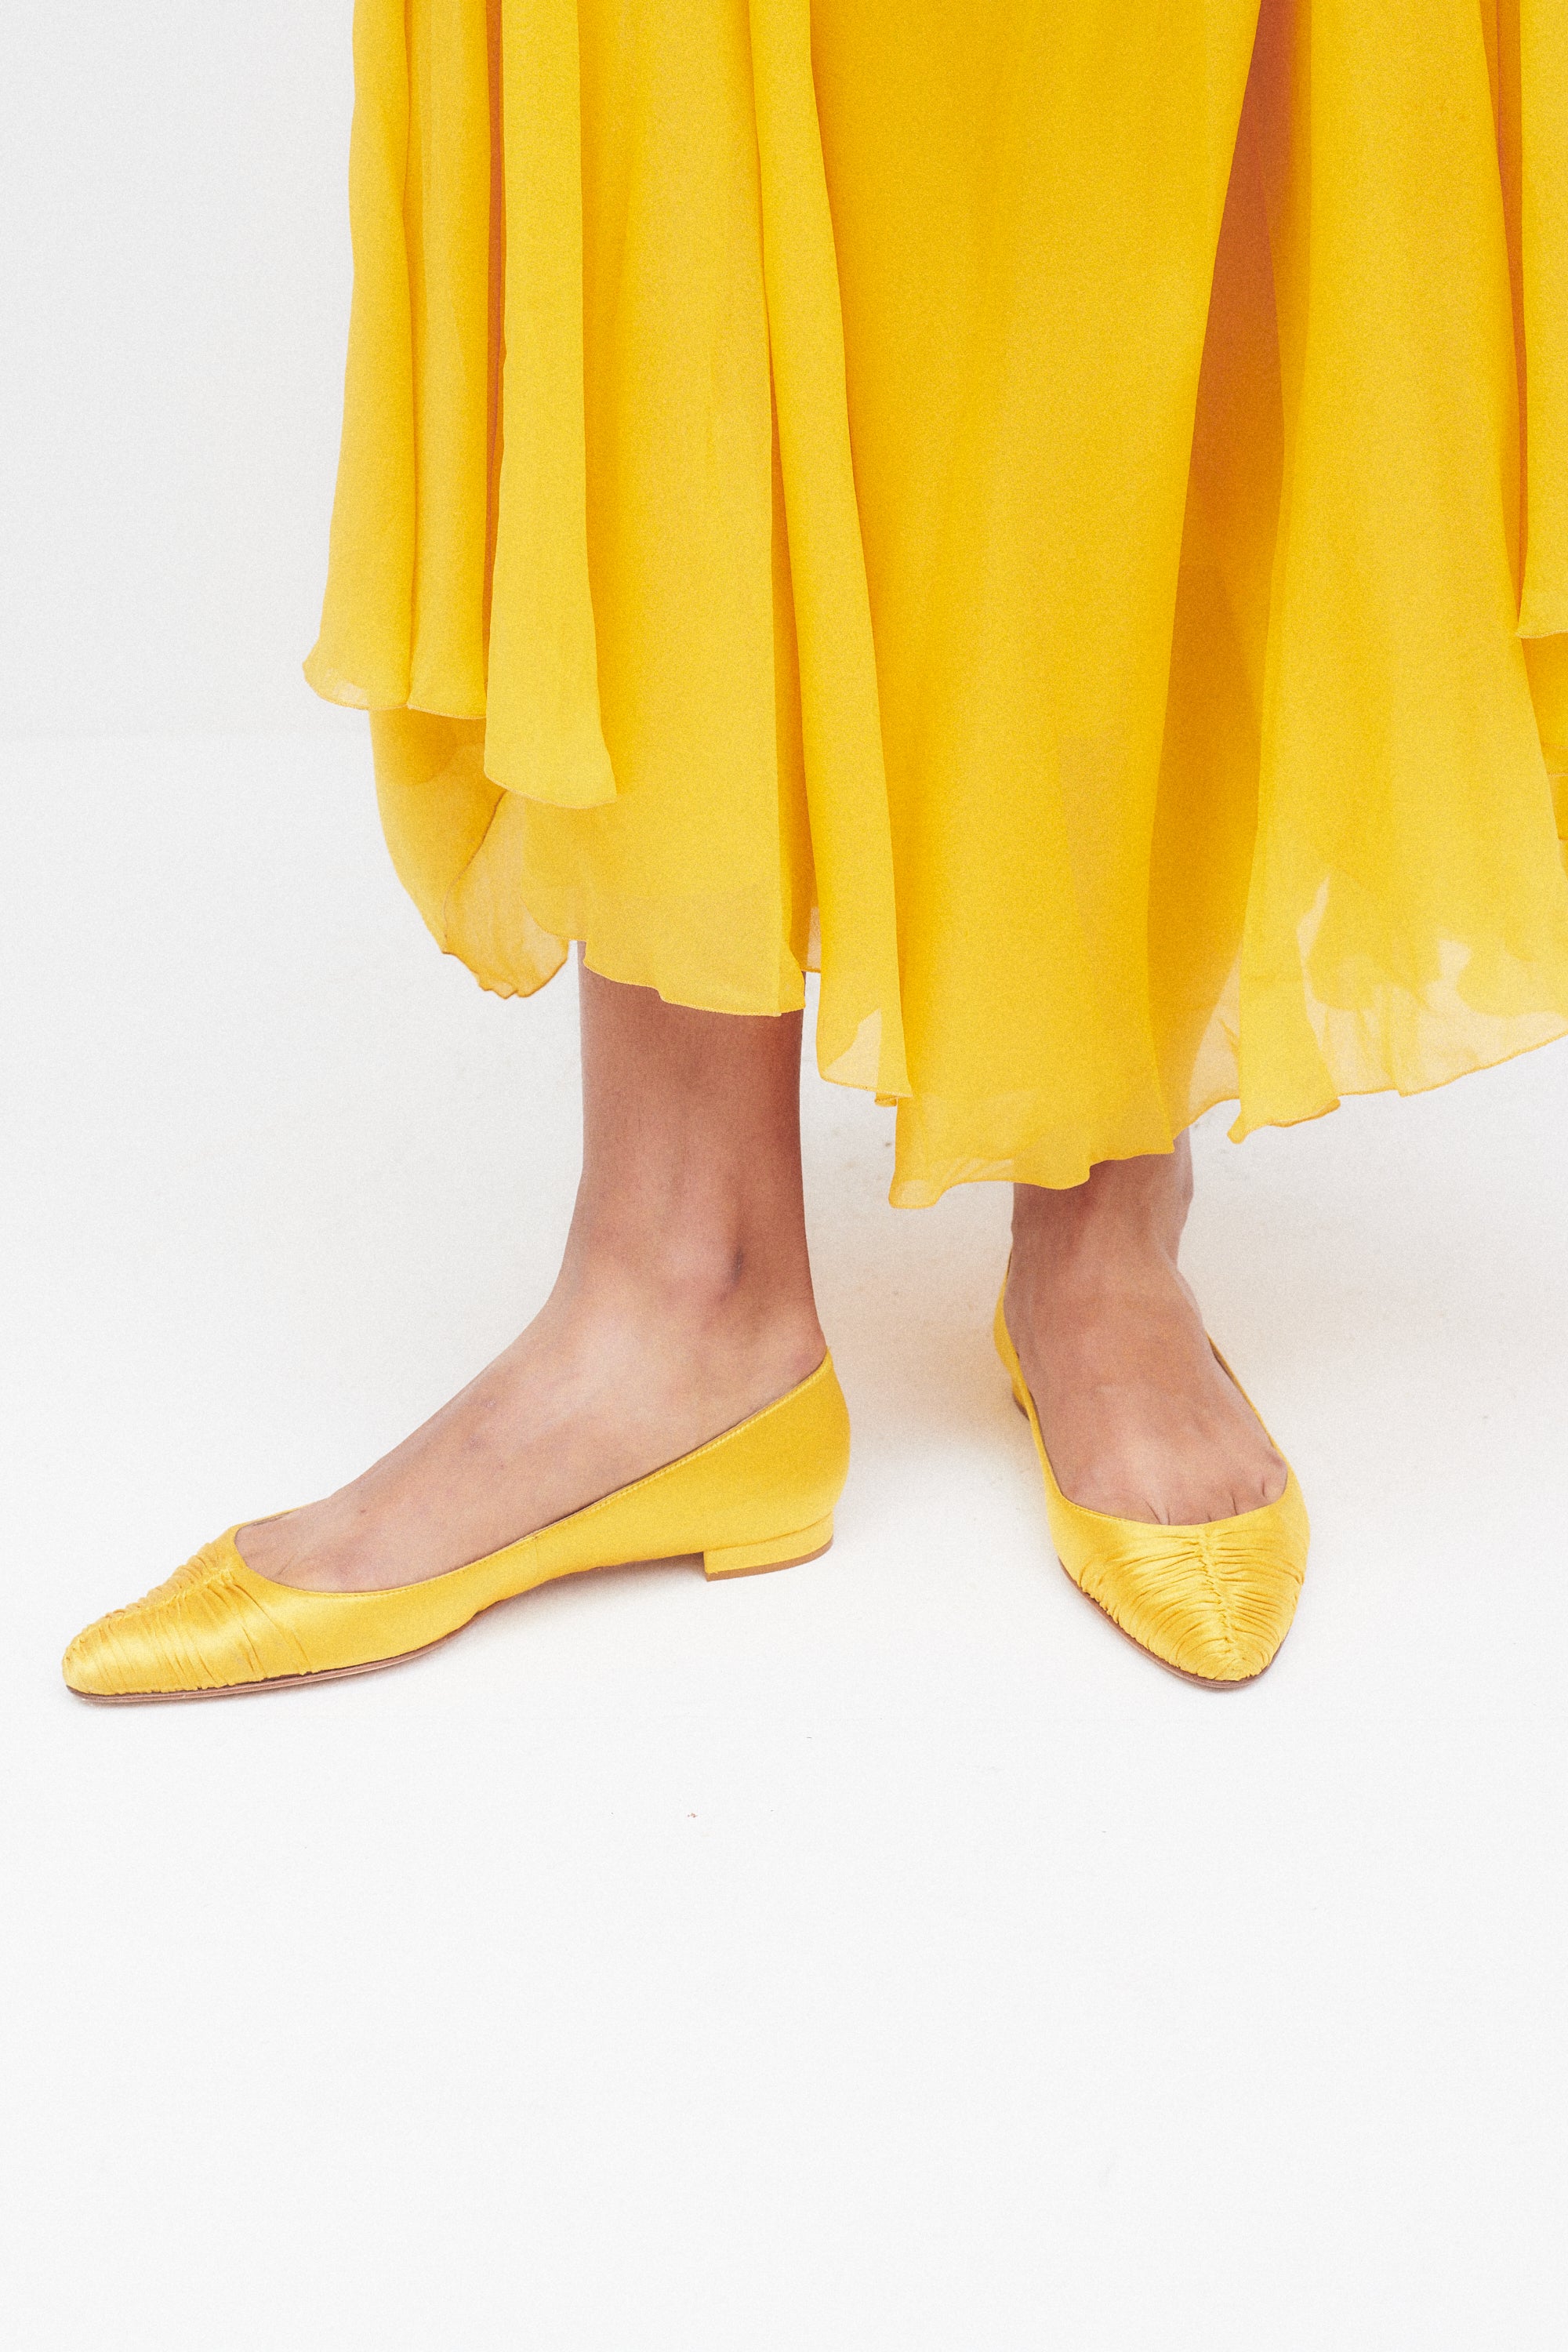 Manolo Blahnik Canary Yellow Heel - Desert Vintage